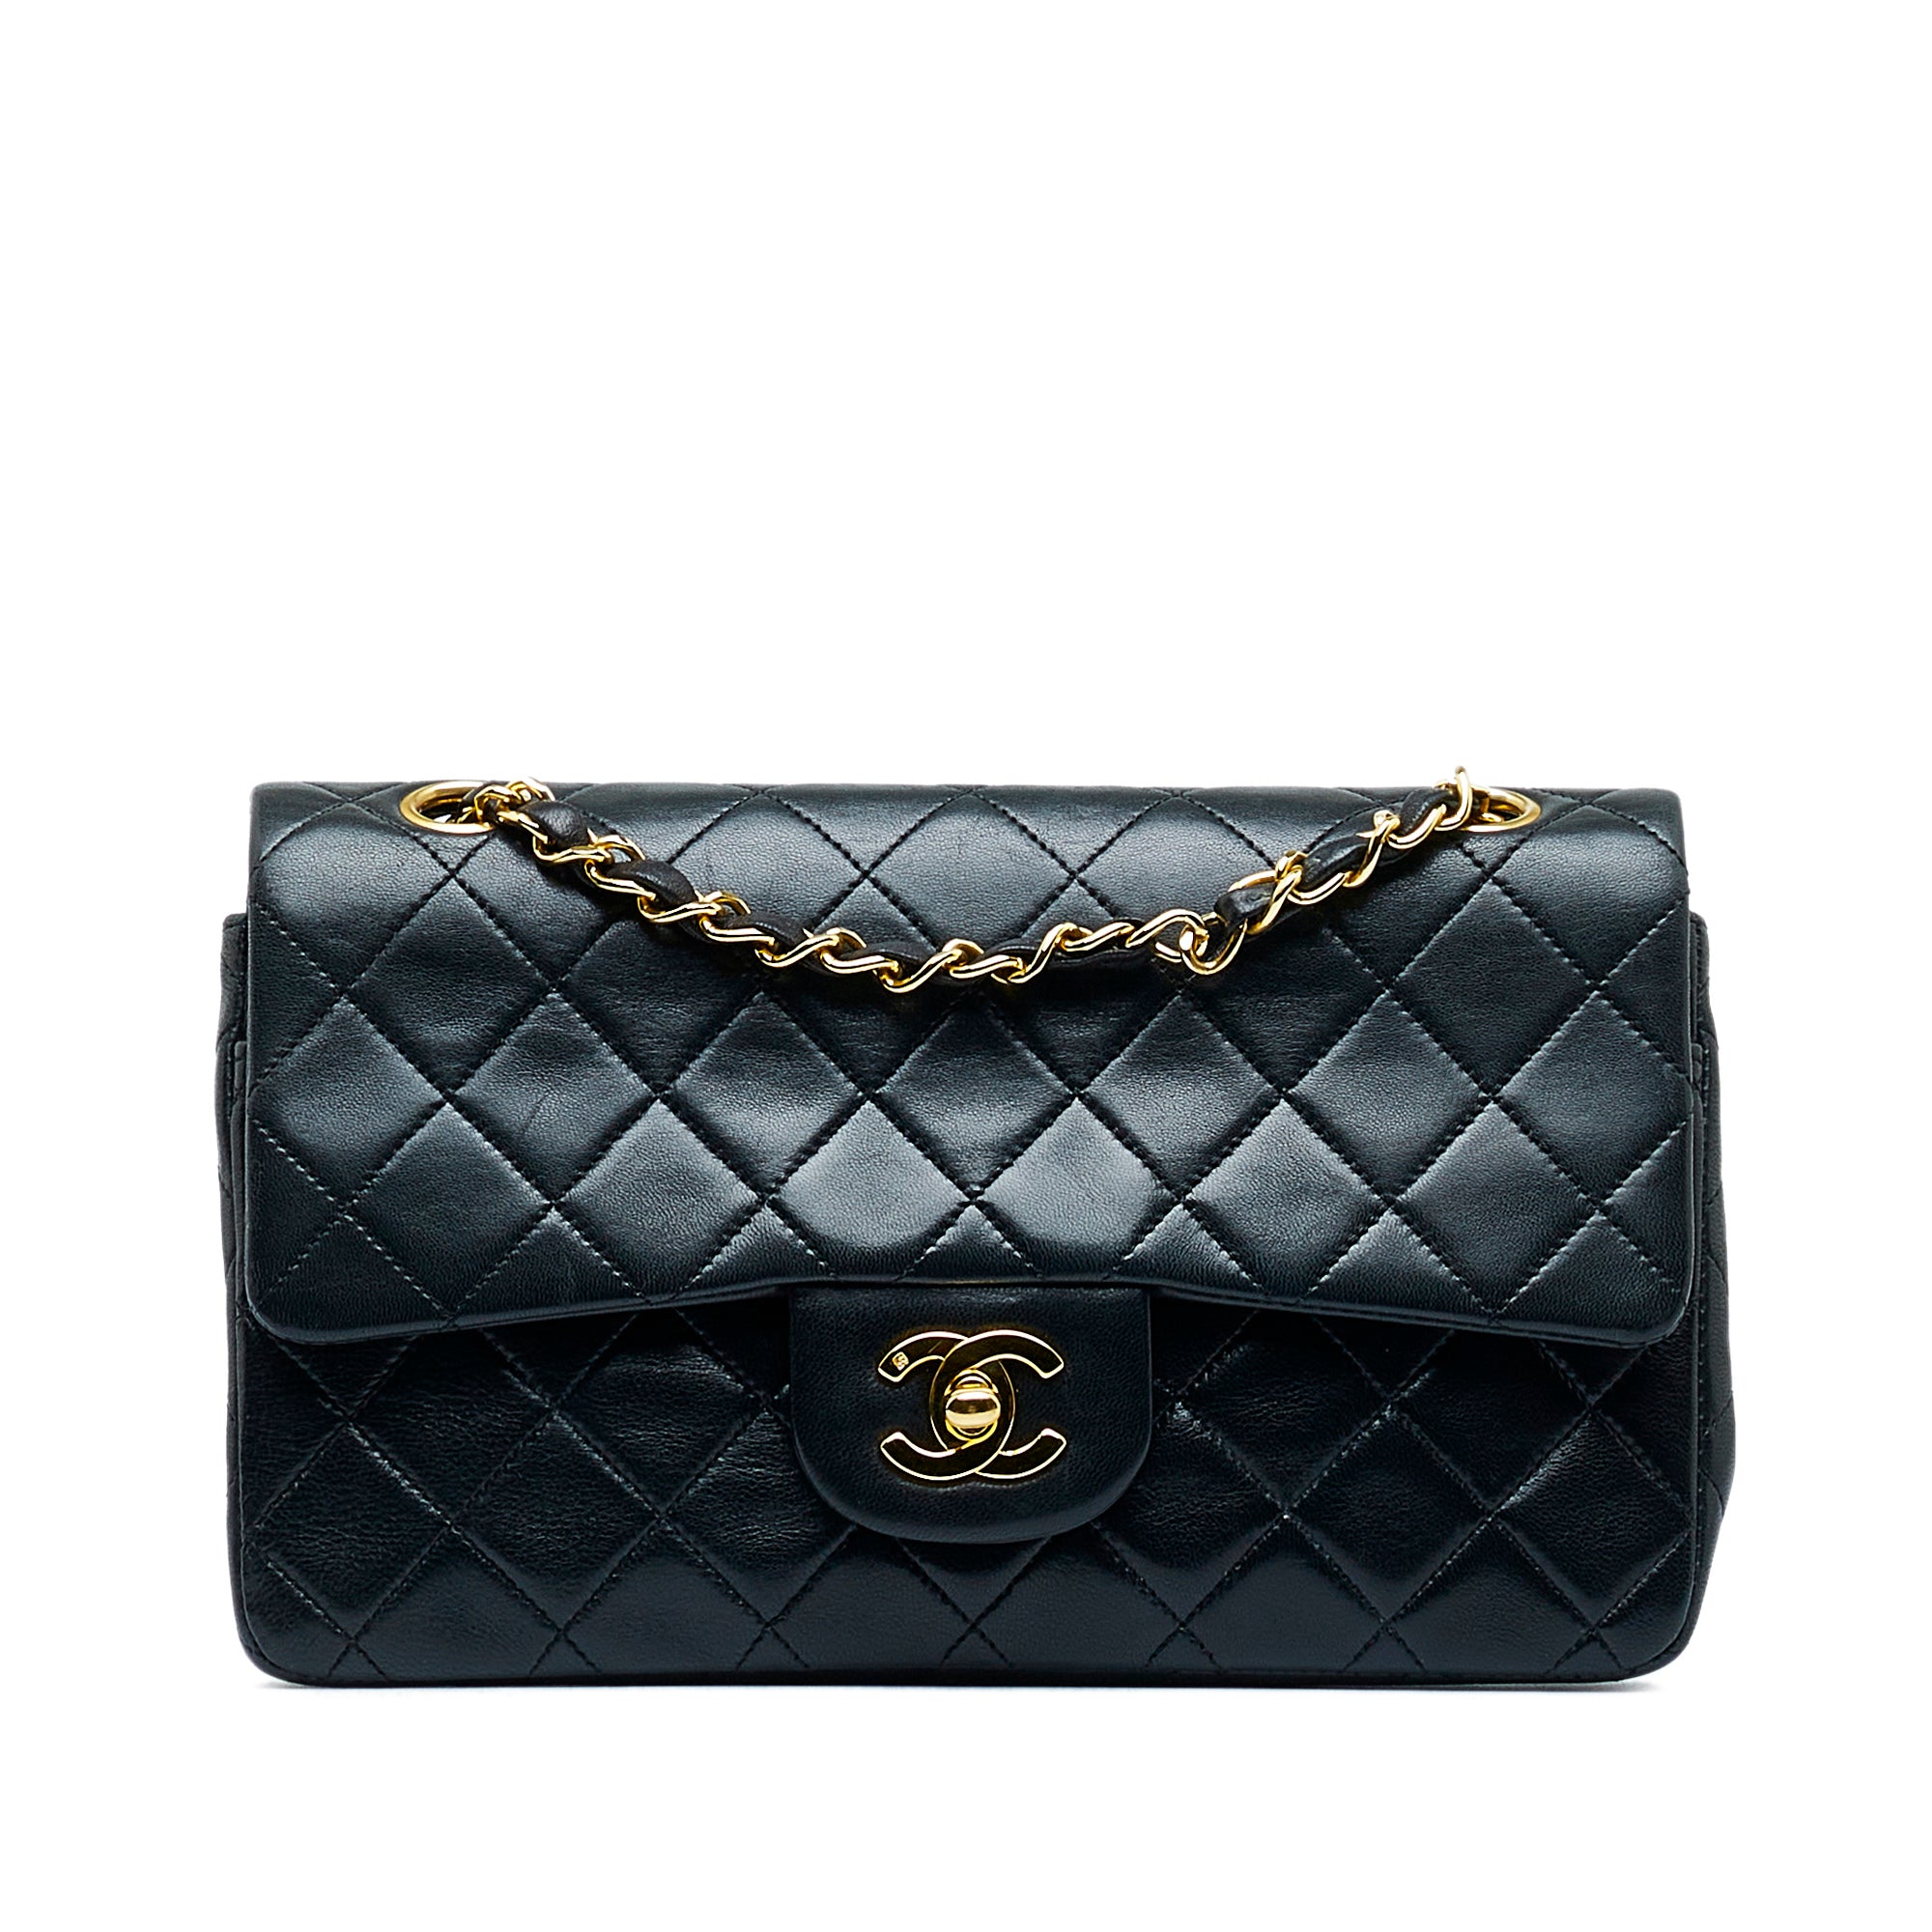 Black Chanel Small Classic Lambskin Double Flap Shoulder Bag, Туфлі chanel  з відкритим носком на високому каблуці